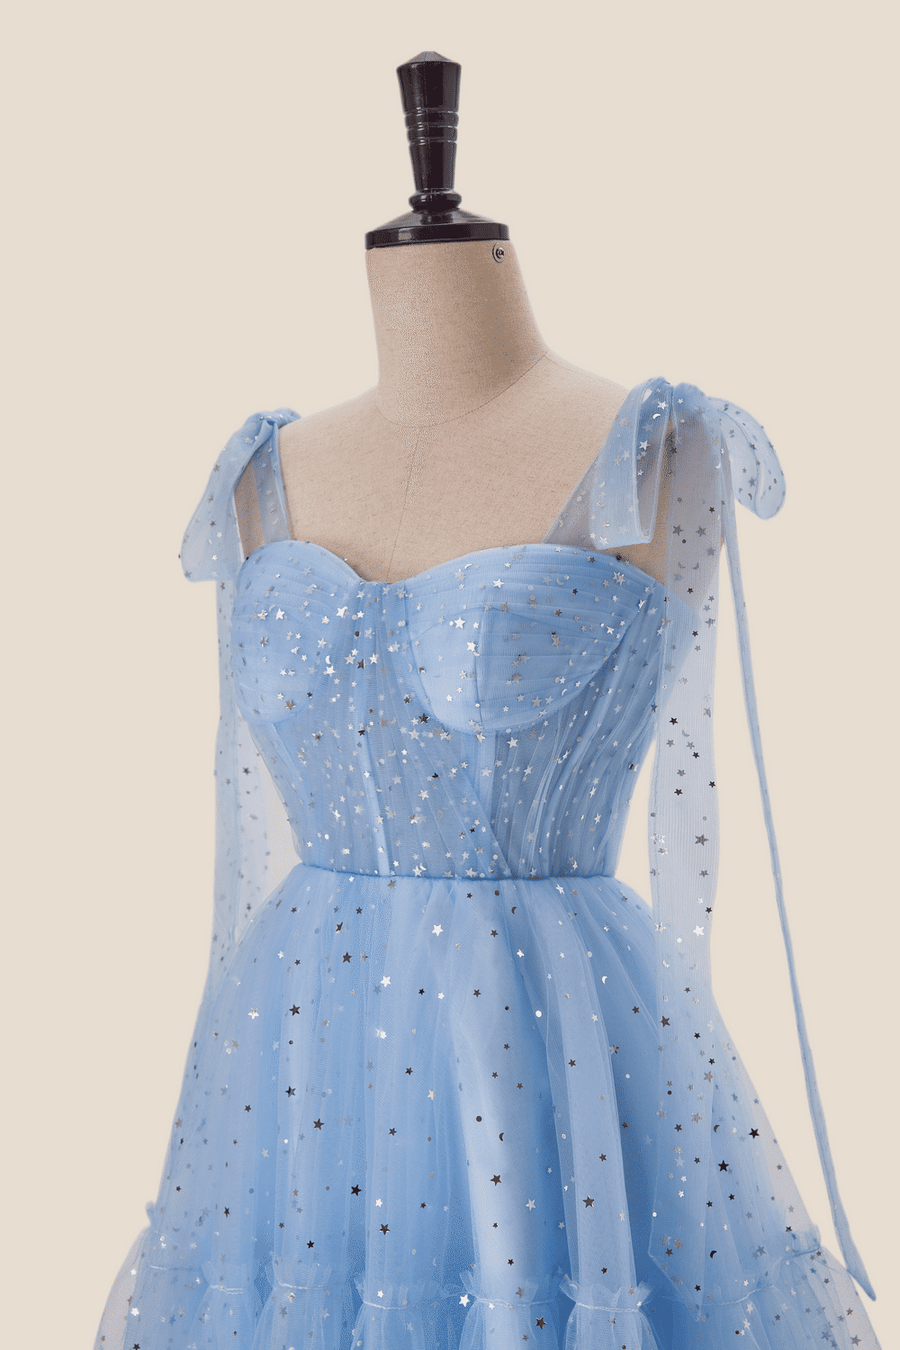 US 4 Starry Light Blue Tulle A-line Princess Dress